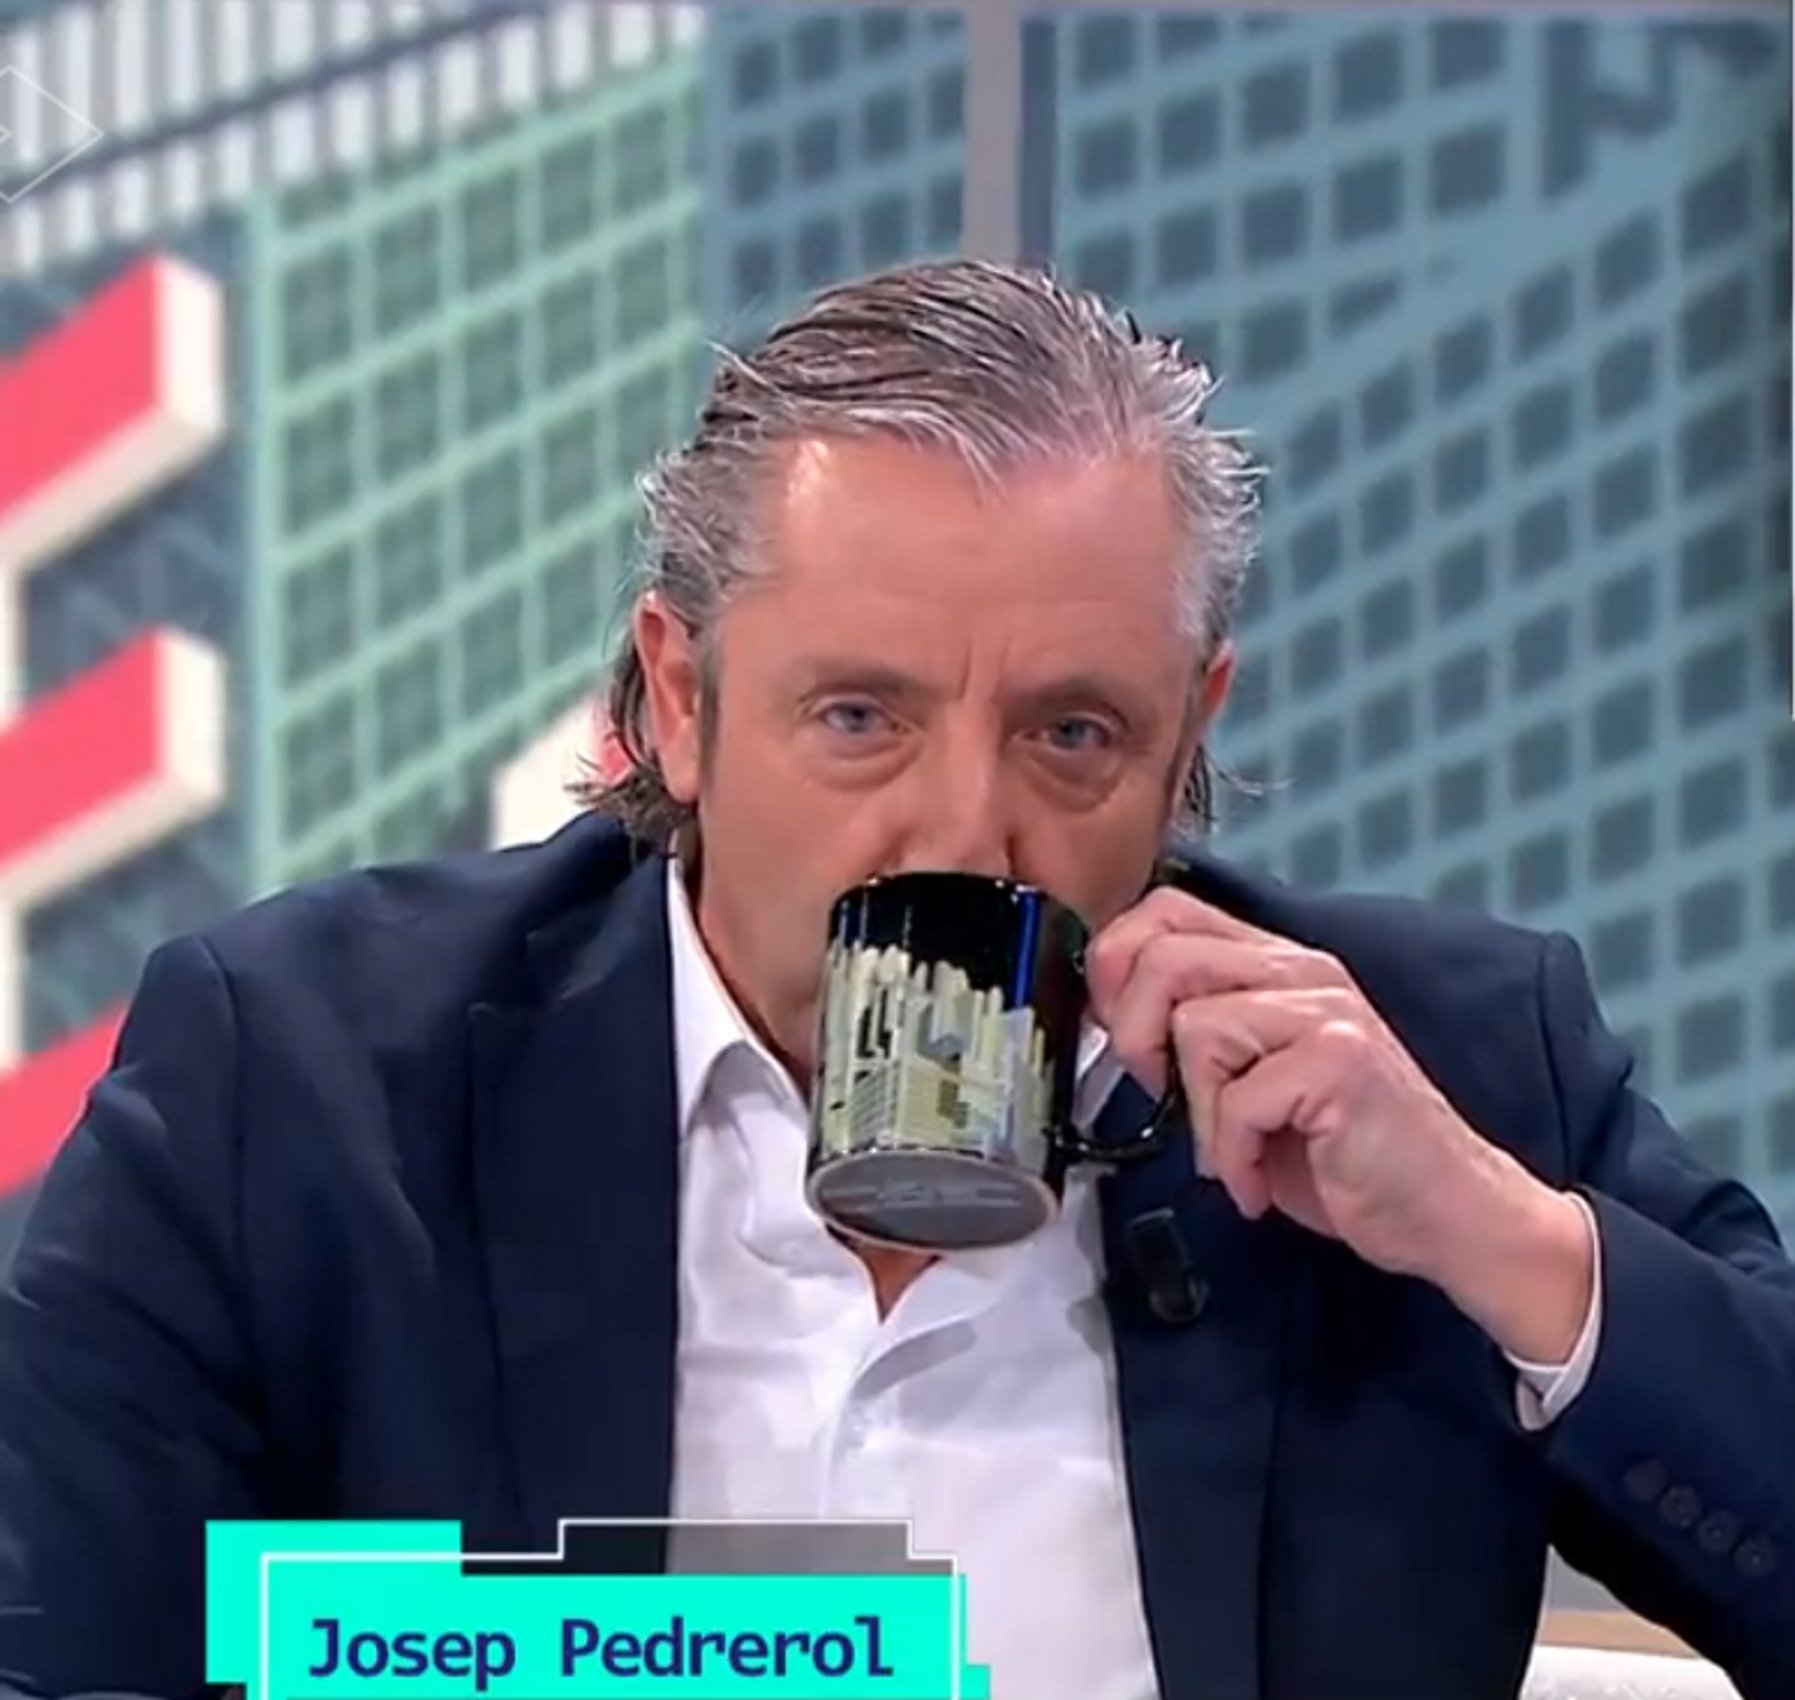 Josep Pedrerol, desfermat antiindepe a La Sexta: "me molesta mucho..."